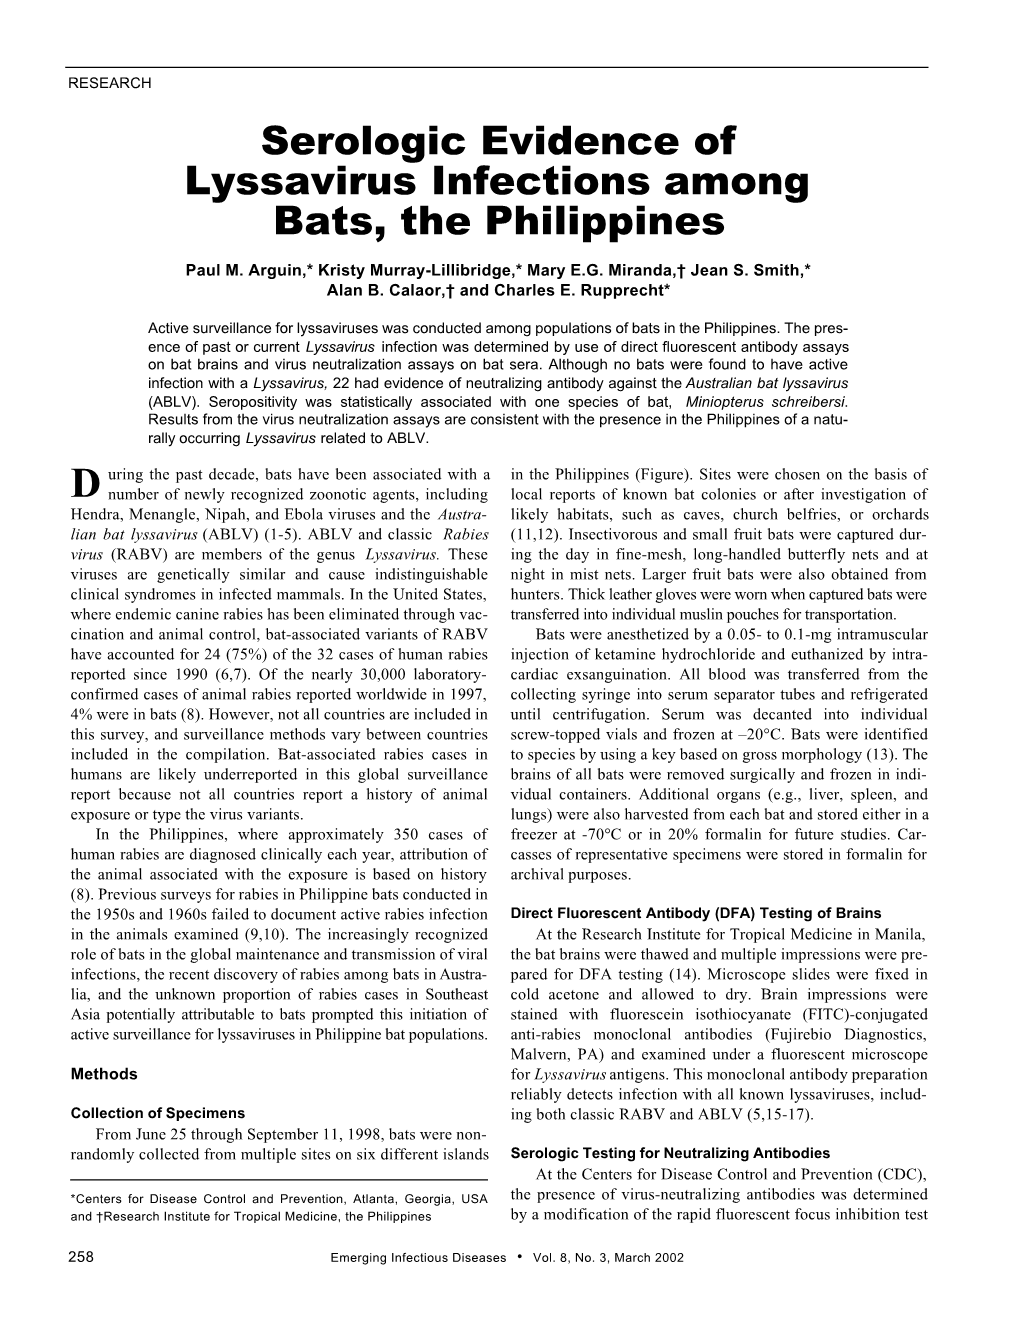 Serologic Evidence of Lyssavirus Infections Among Bats, the Philippines Paul M